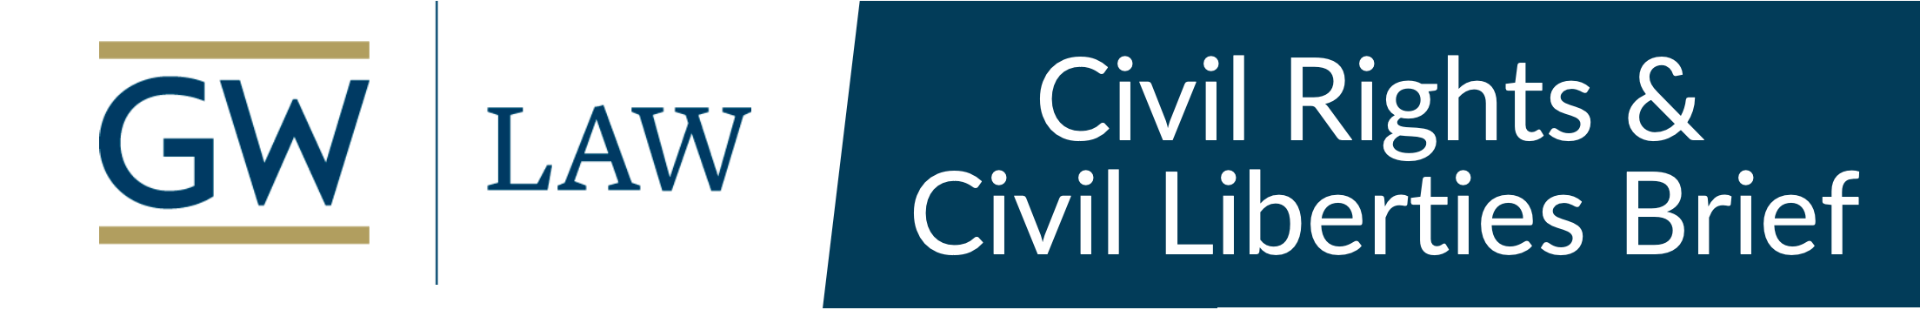 Civil Rights & Civil Liberties Brief